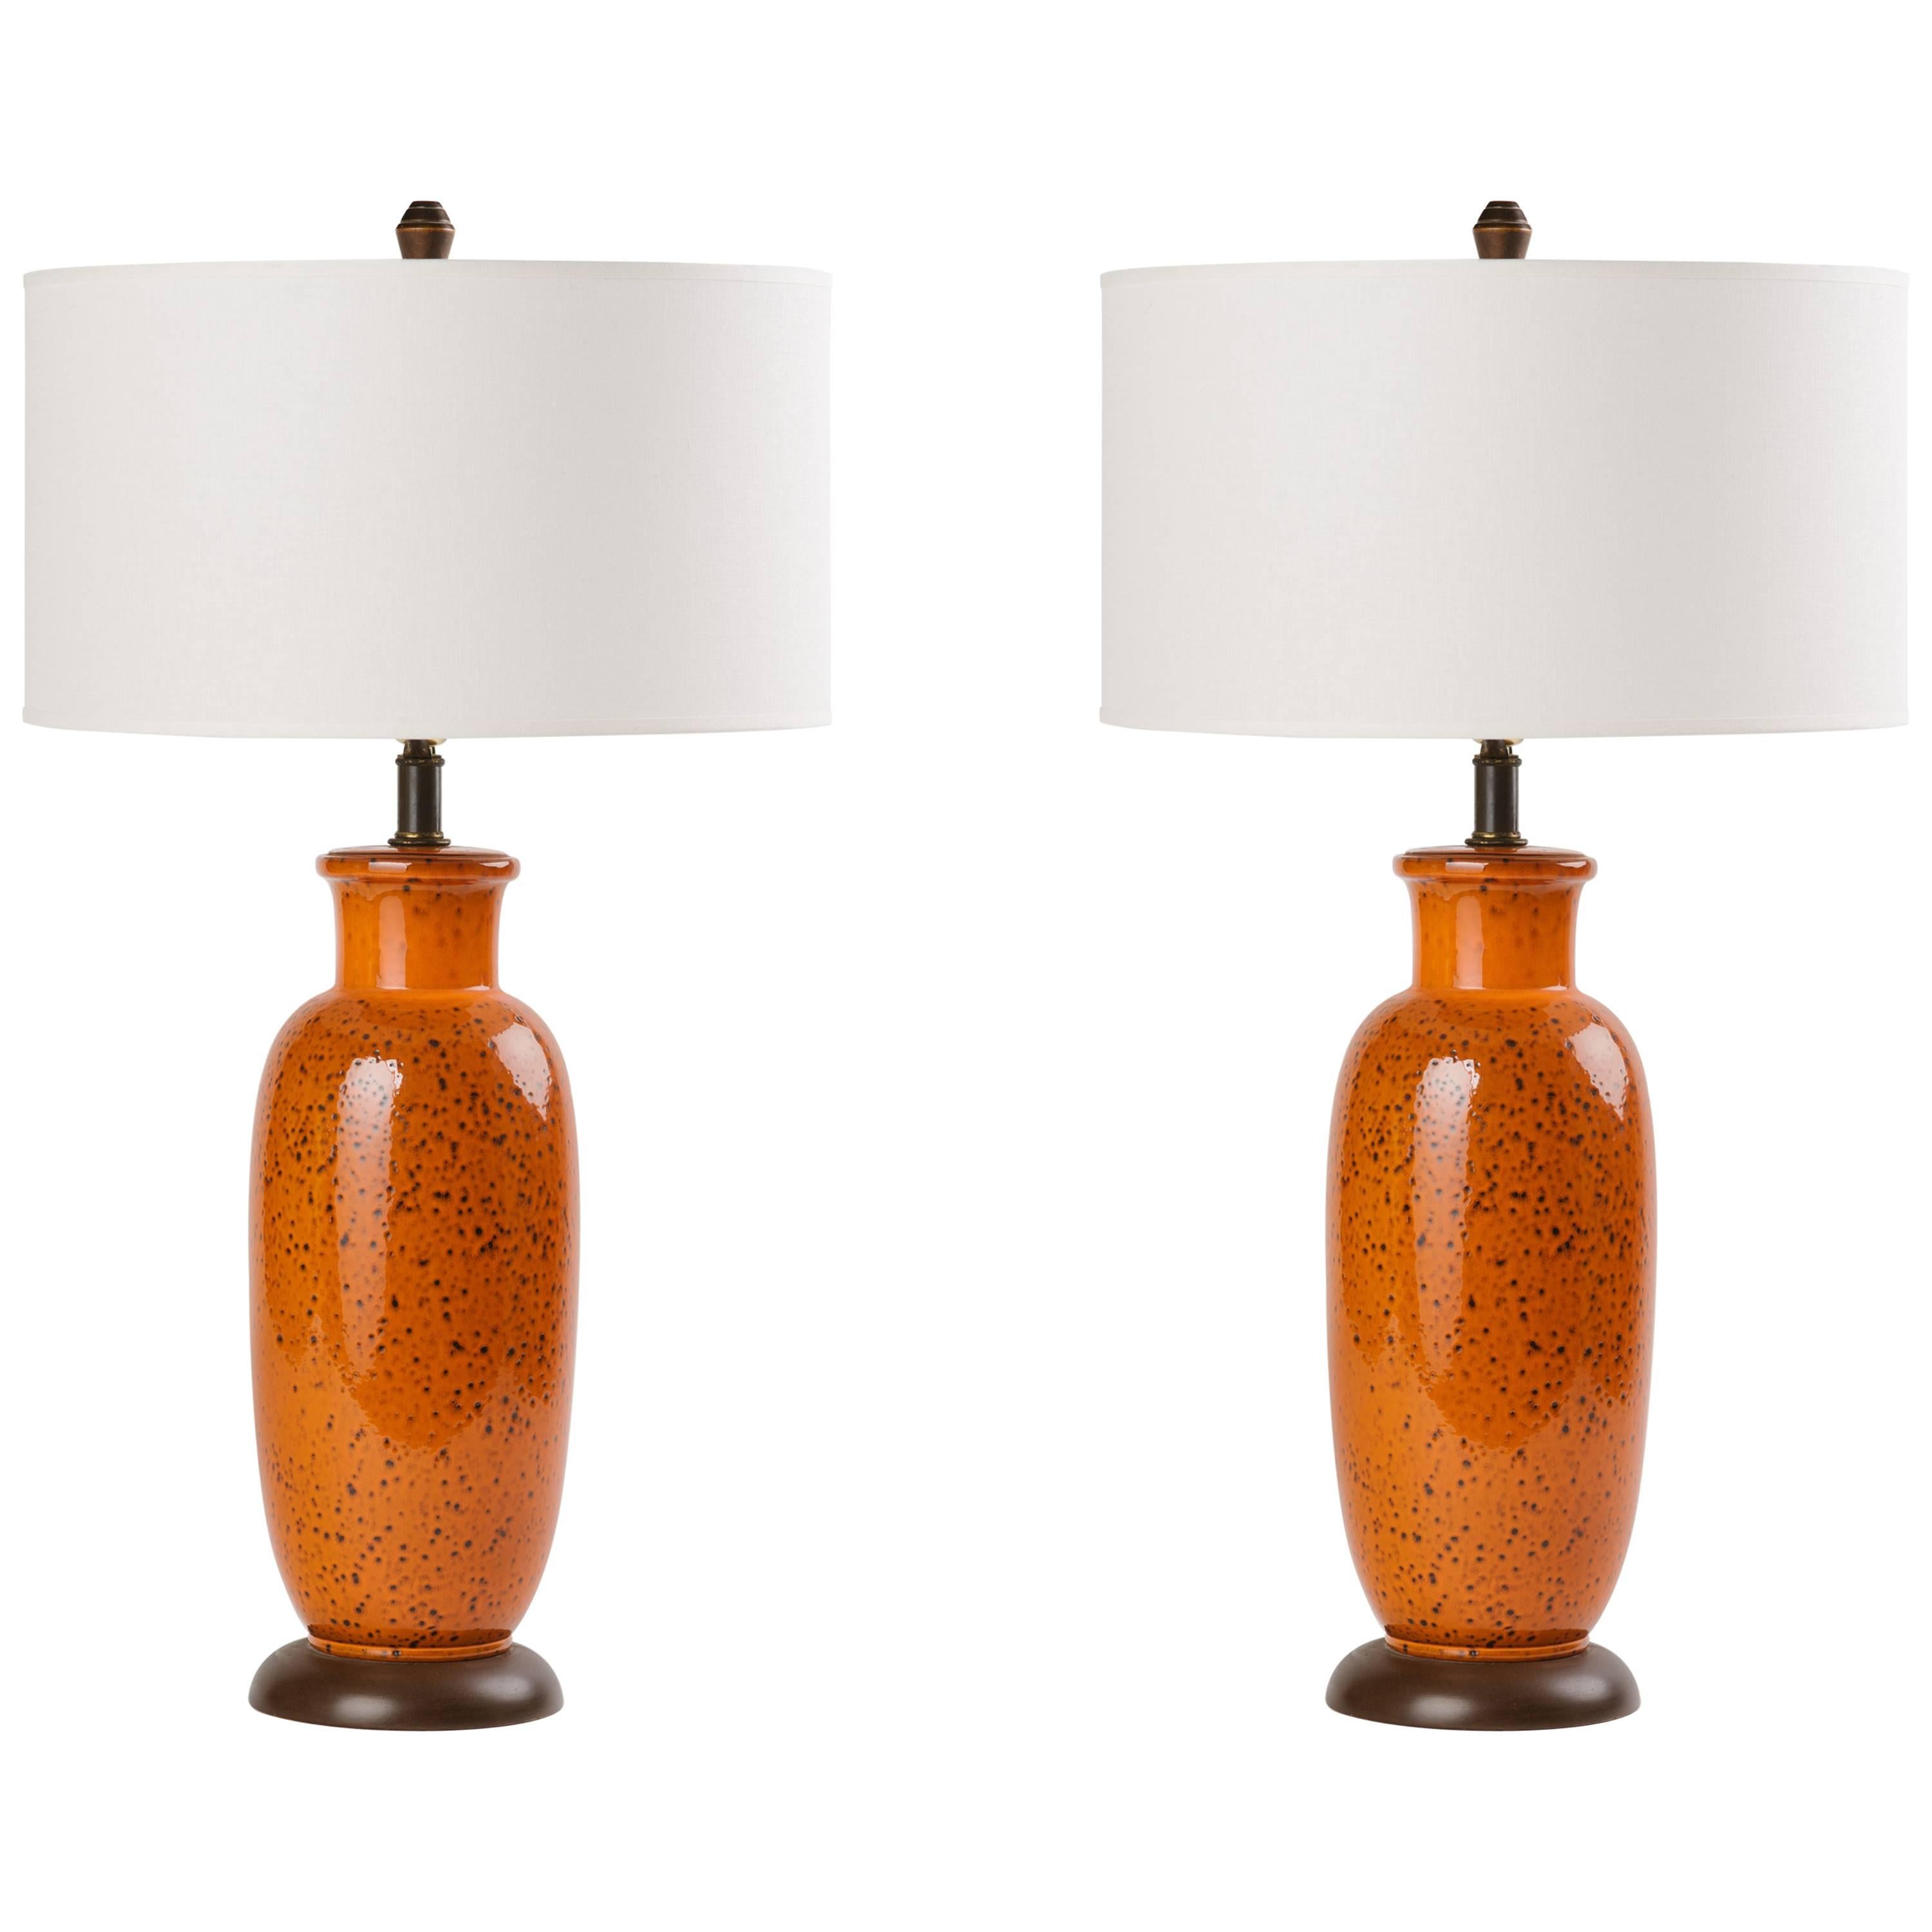 Pair of Mid-Century Modern Pottery Lamps in Burnt Orange